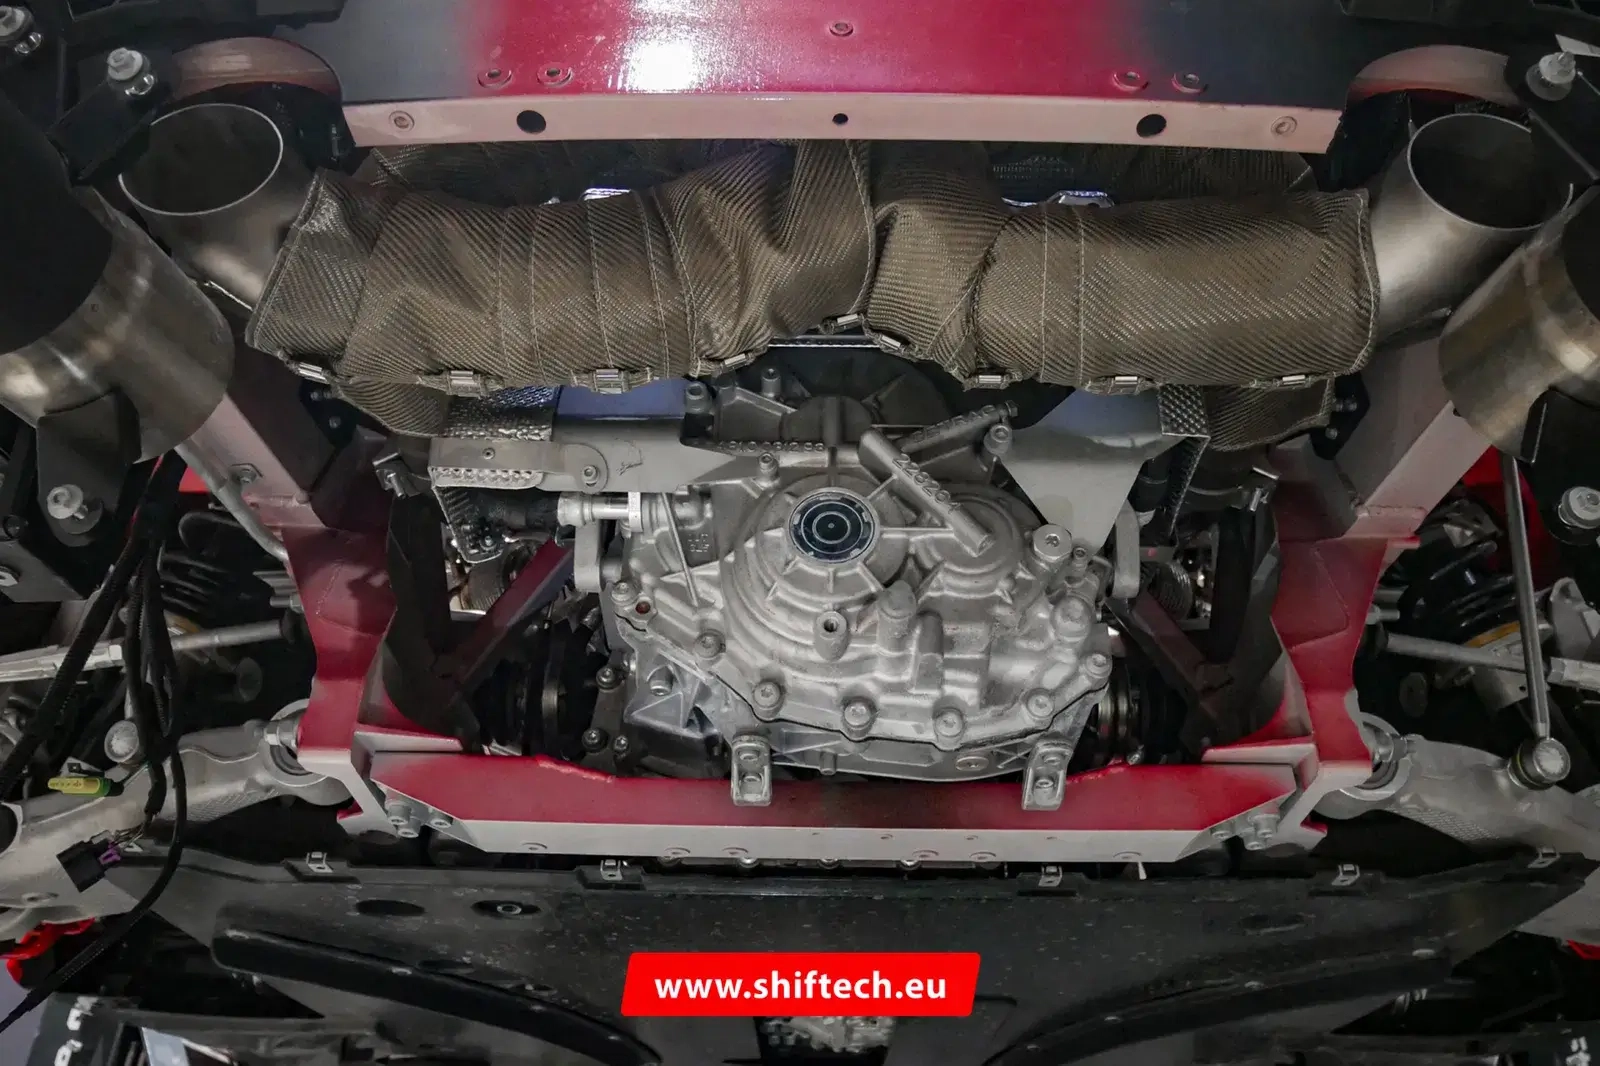 Ferrari 488 gtb pista reporgrammation moteur echappement ipe 17 1697620123